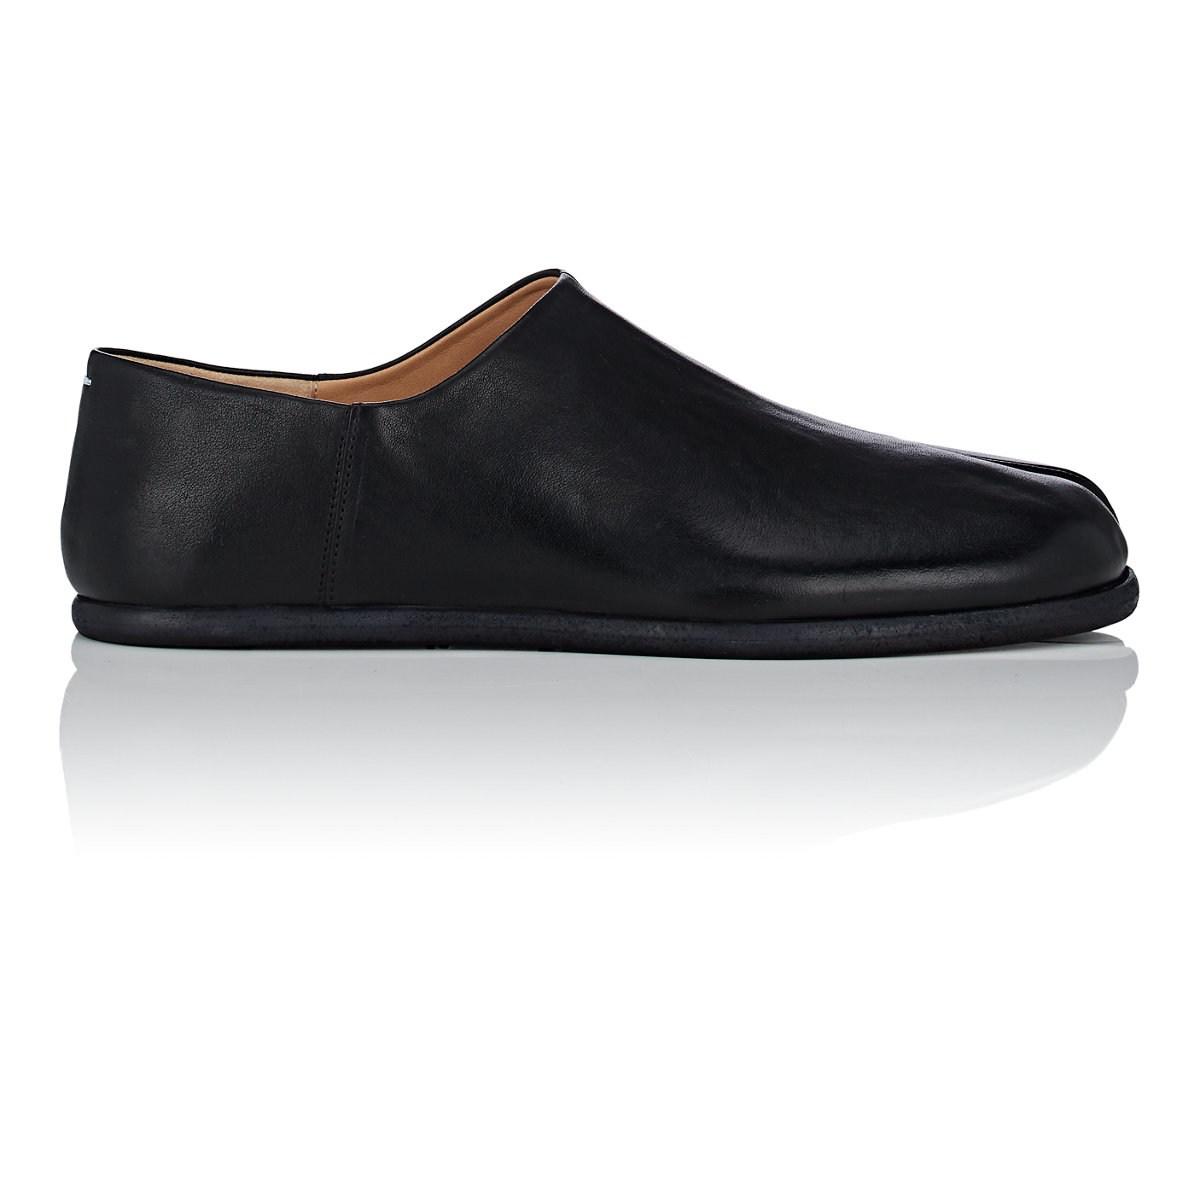 Lyst - Maison Margiela Tabi Leather Loafers in Black for Men